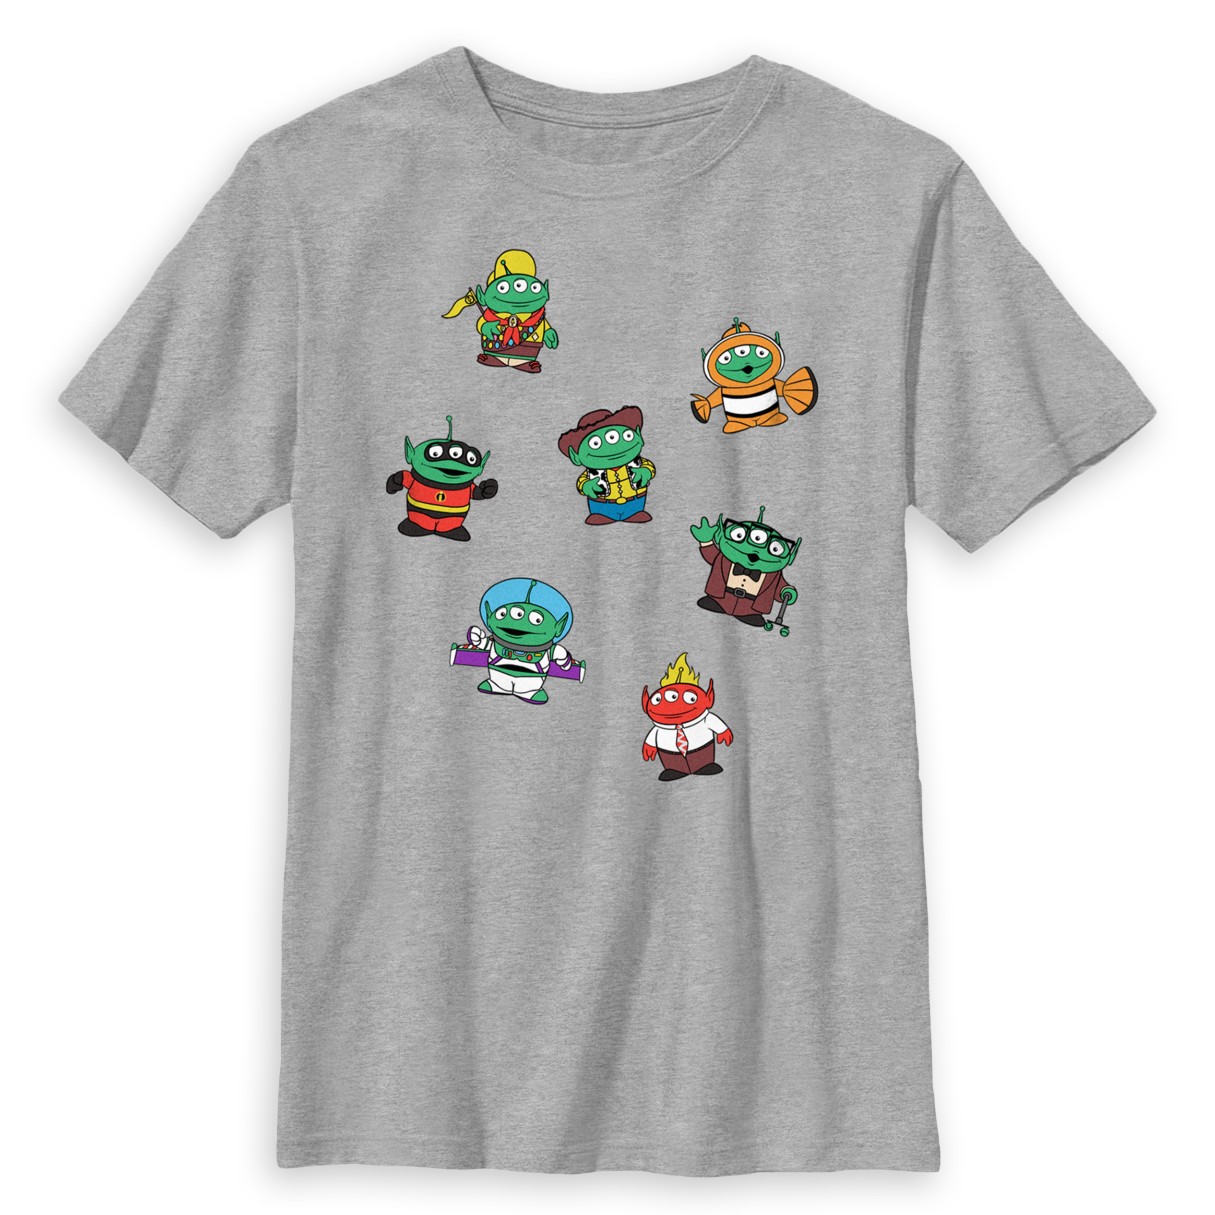 Aliens Pixar Remix T-Shirt for Kids – Toy Story